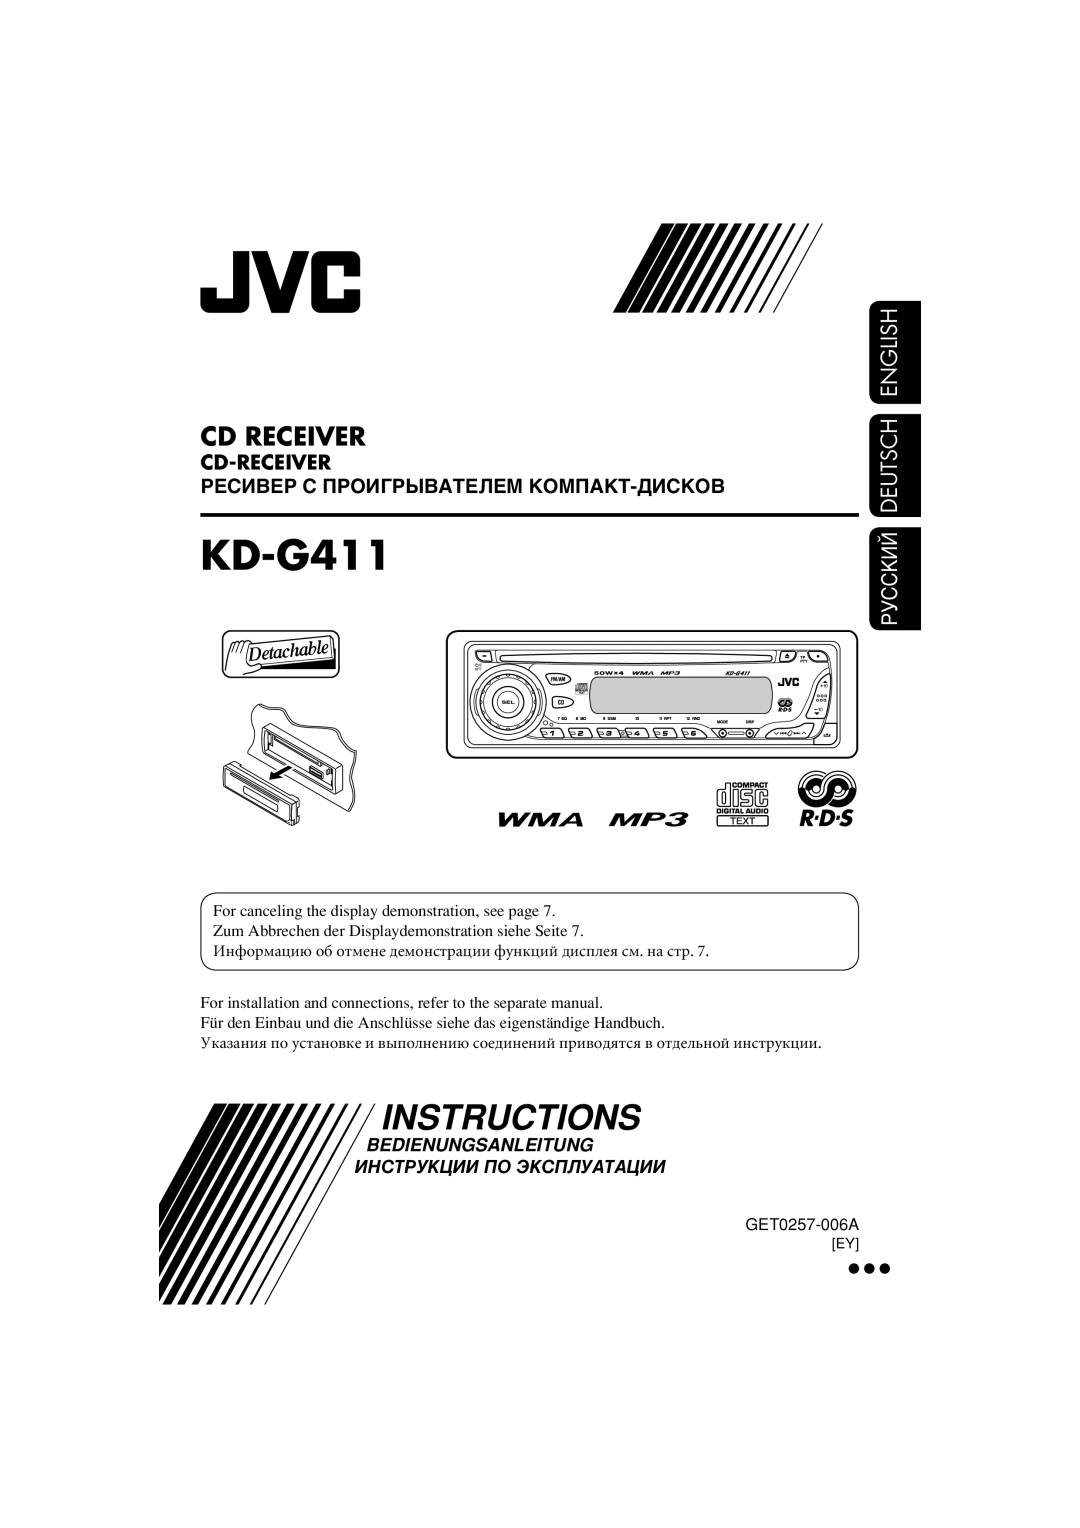 JVC KD-G411 manual Руcckий Deutsch English, Cd-Receiver, Ресивер С Проигрывателем Компакт-Дисков, Bedienungsanleitung 